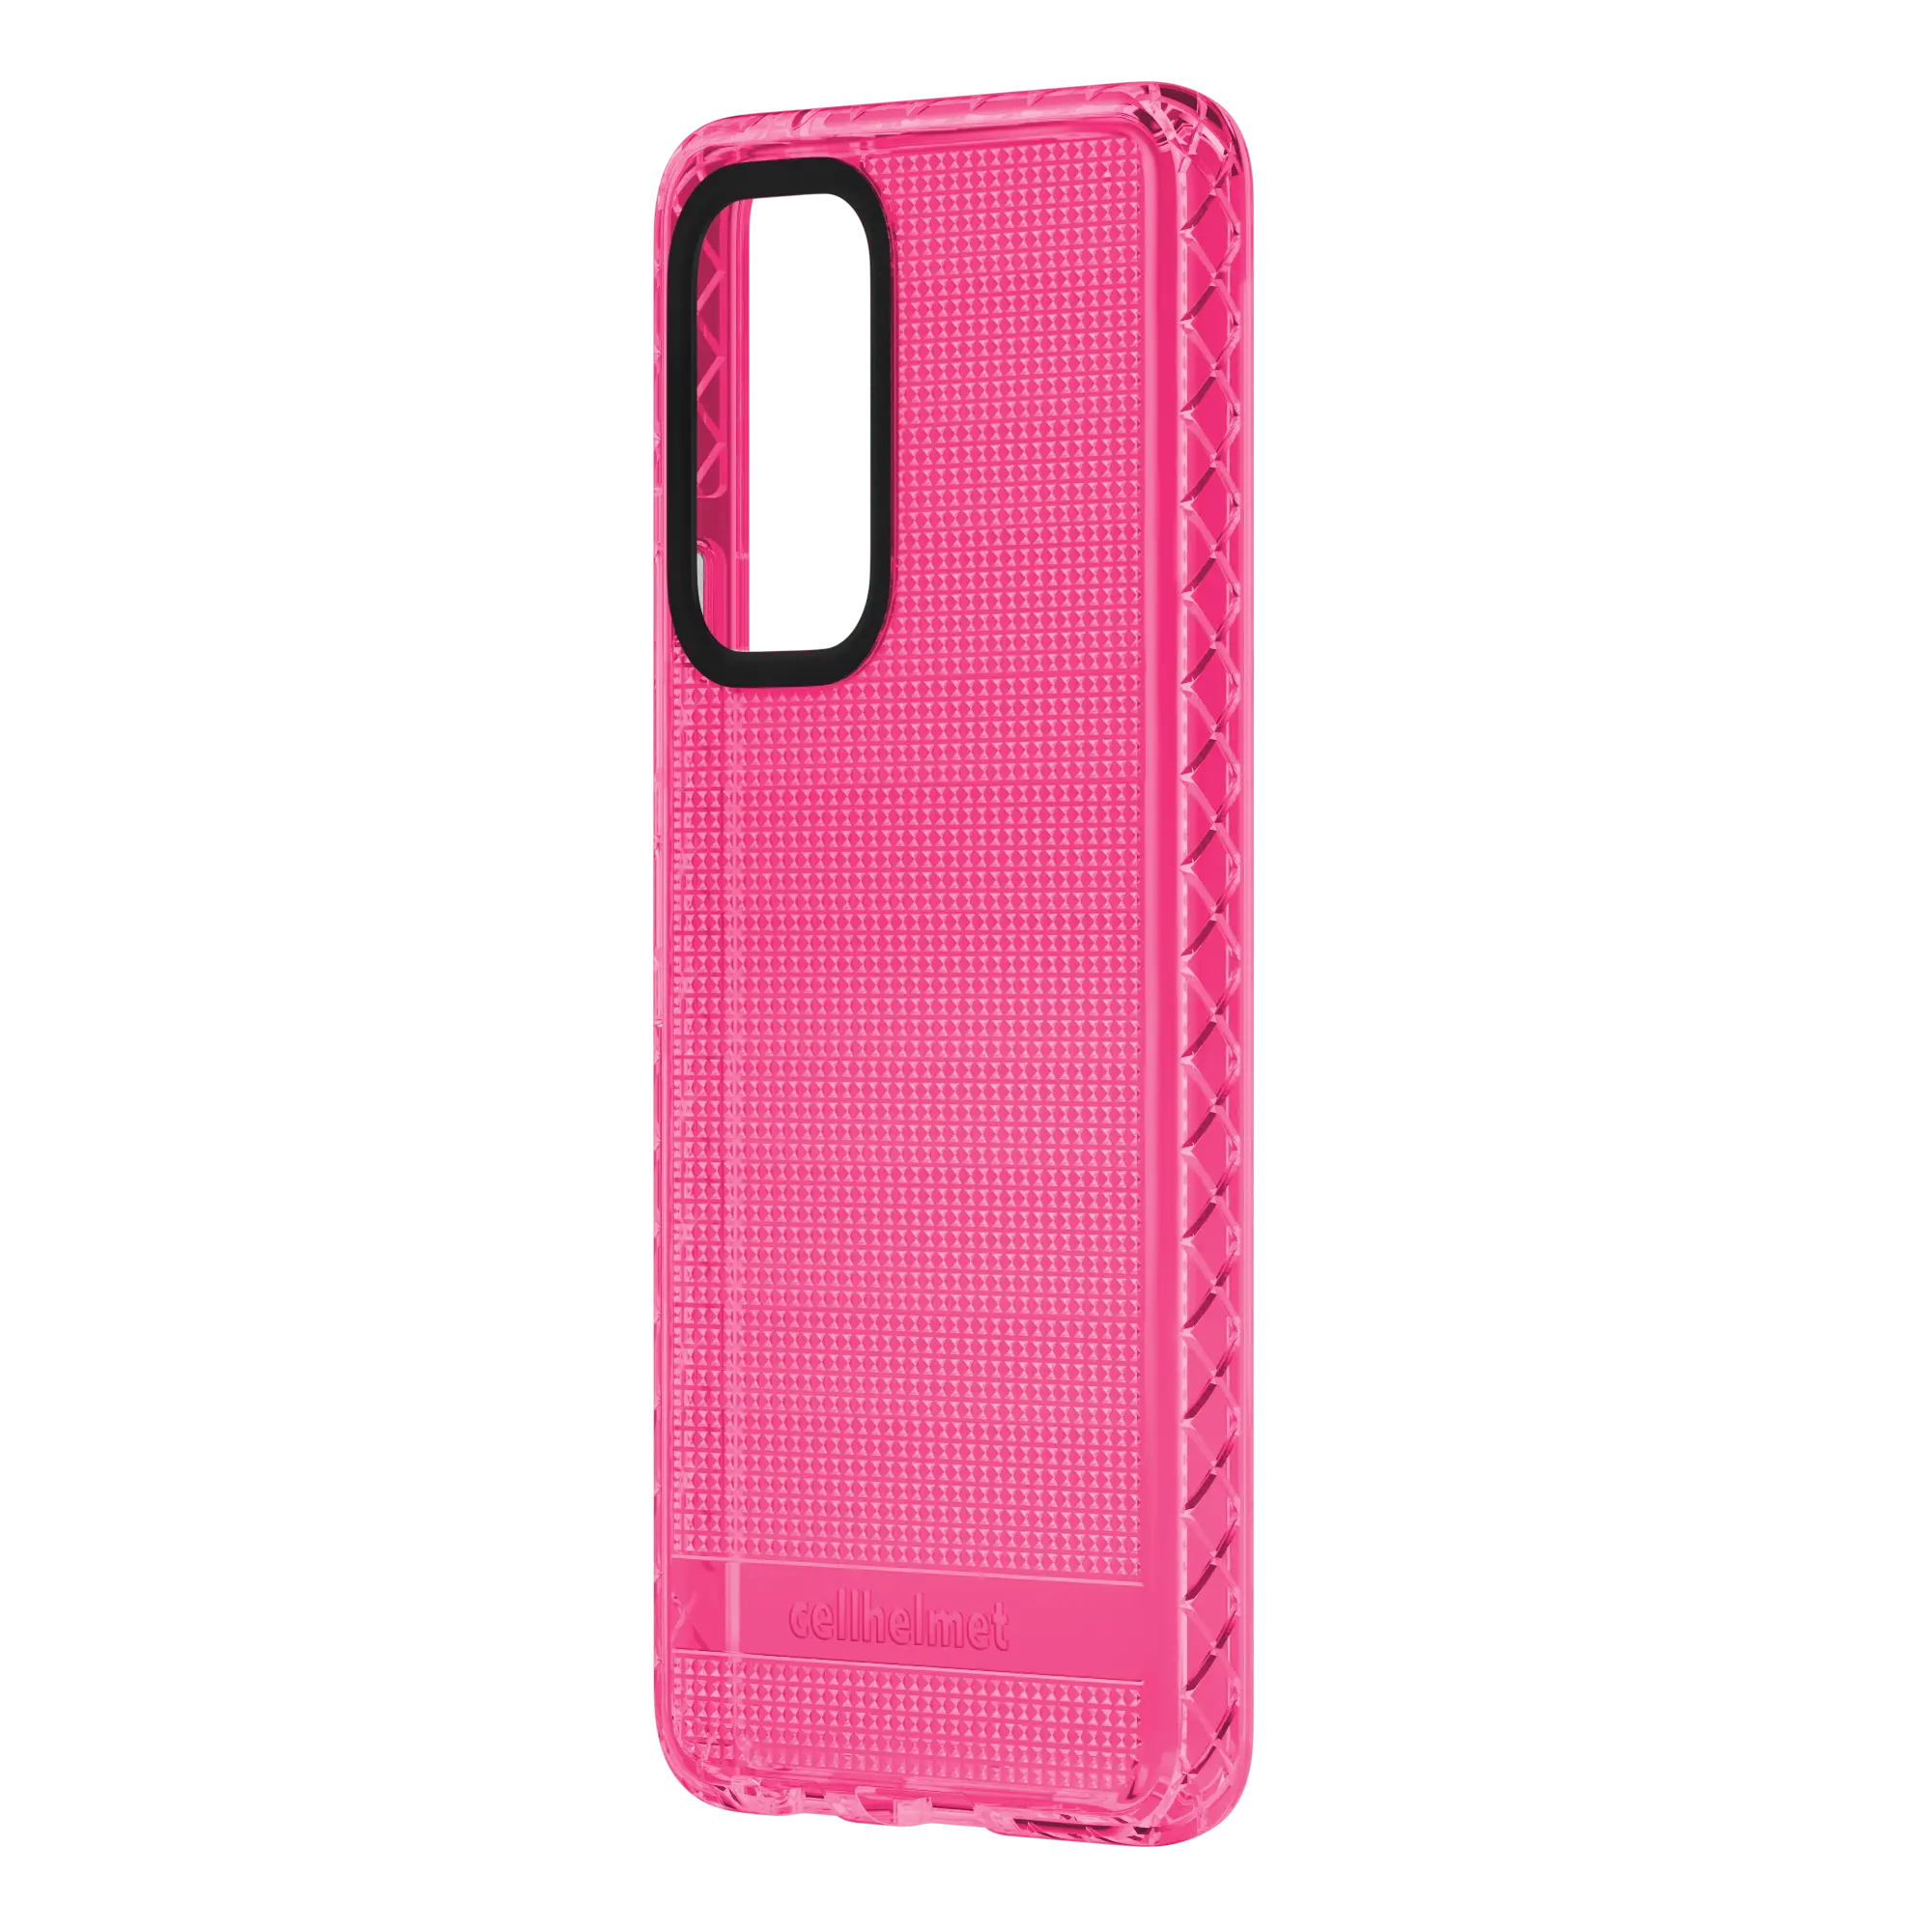 Altitude X Series for Samsung Galaxy A03s  - Pink - Case -  - cellhelmet